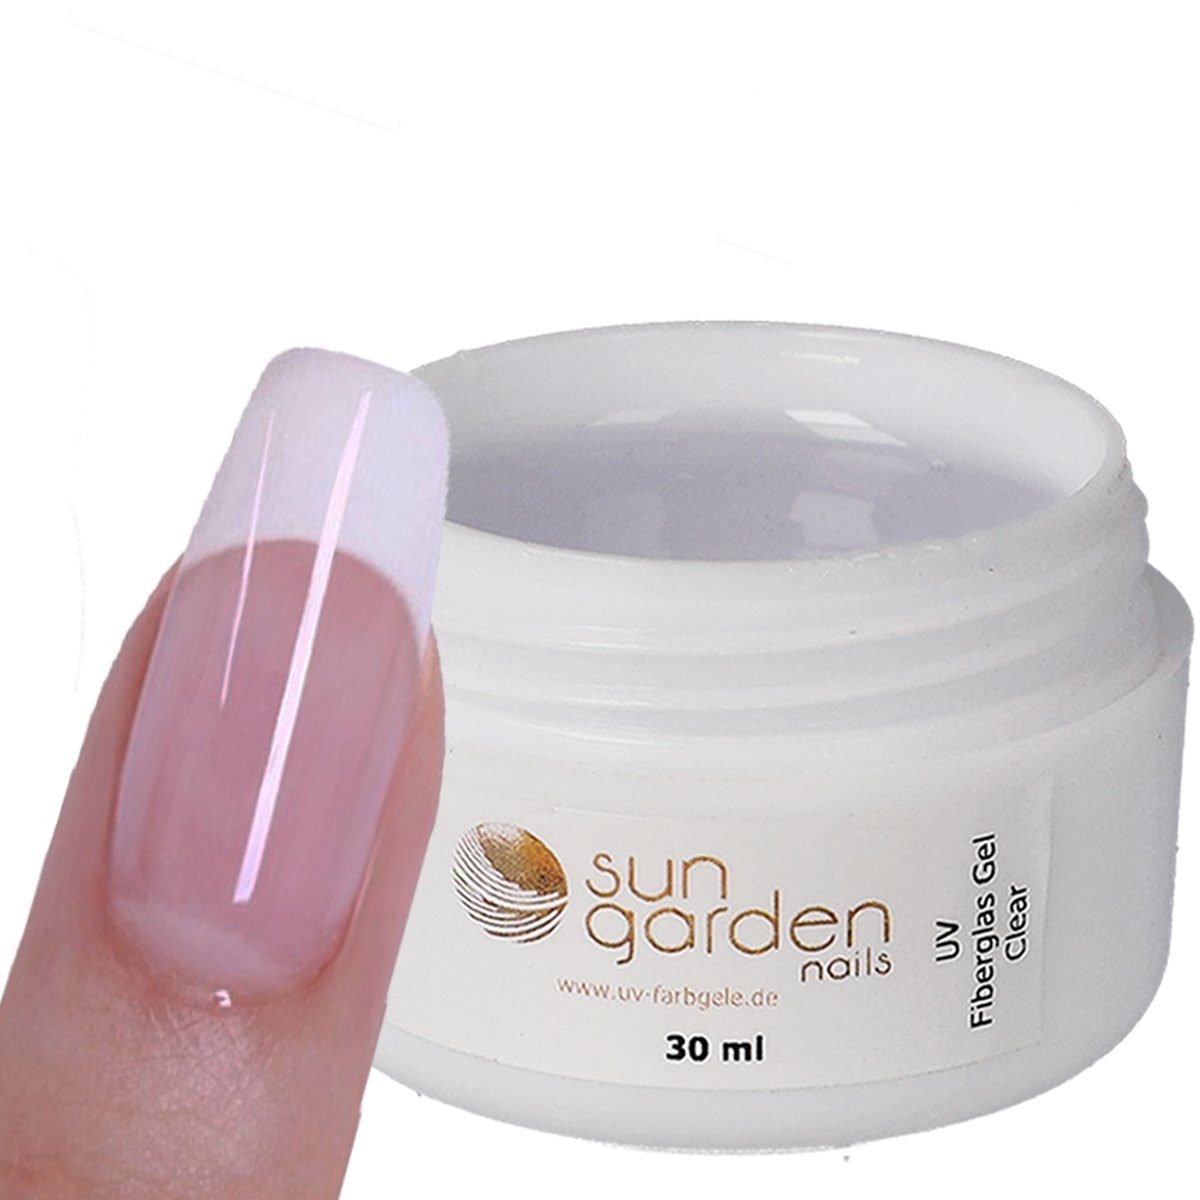 Garden UV Nails Klar ml Nagellack Fiberglas Gel Sun 30